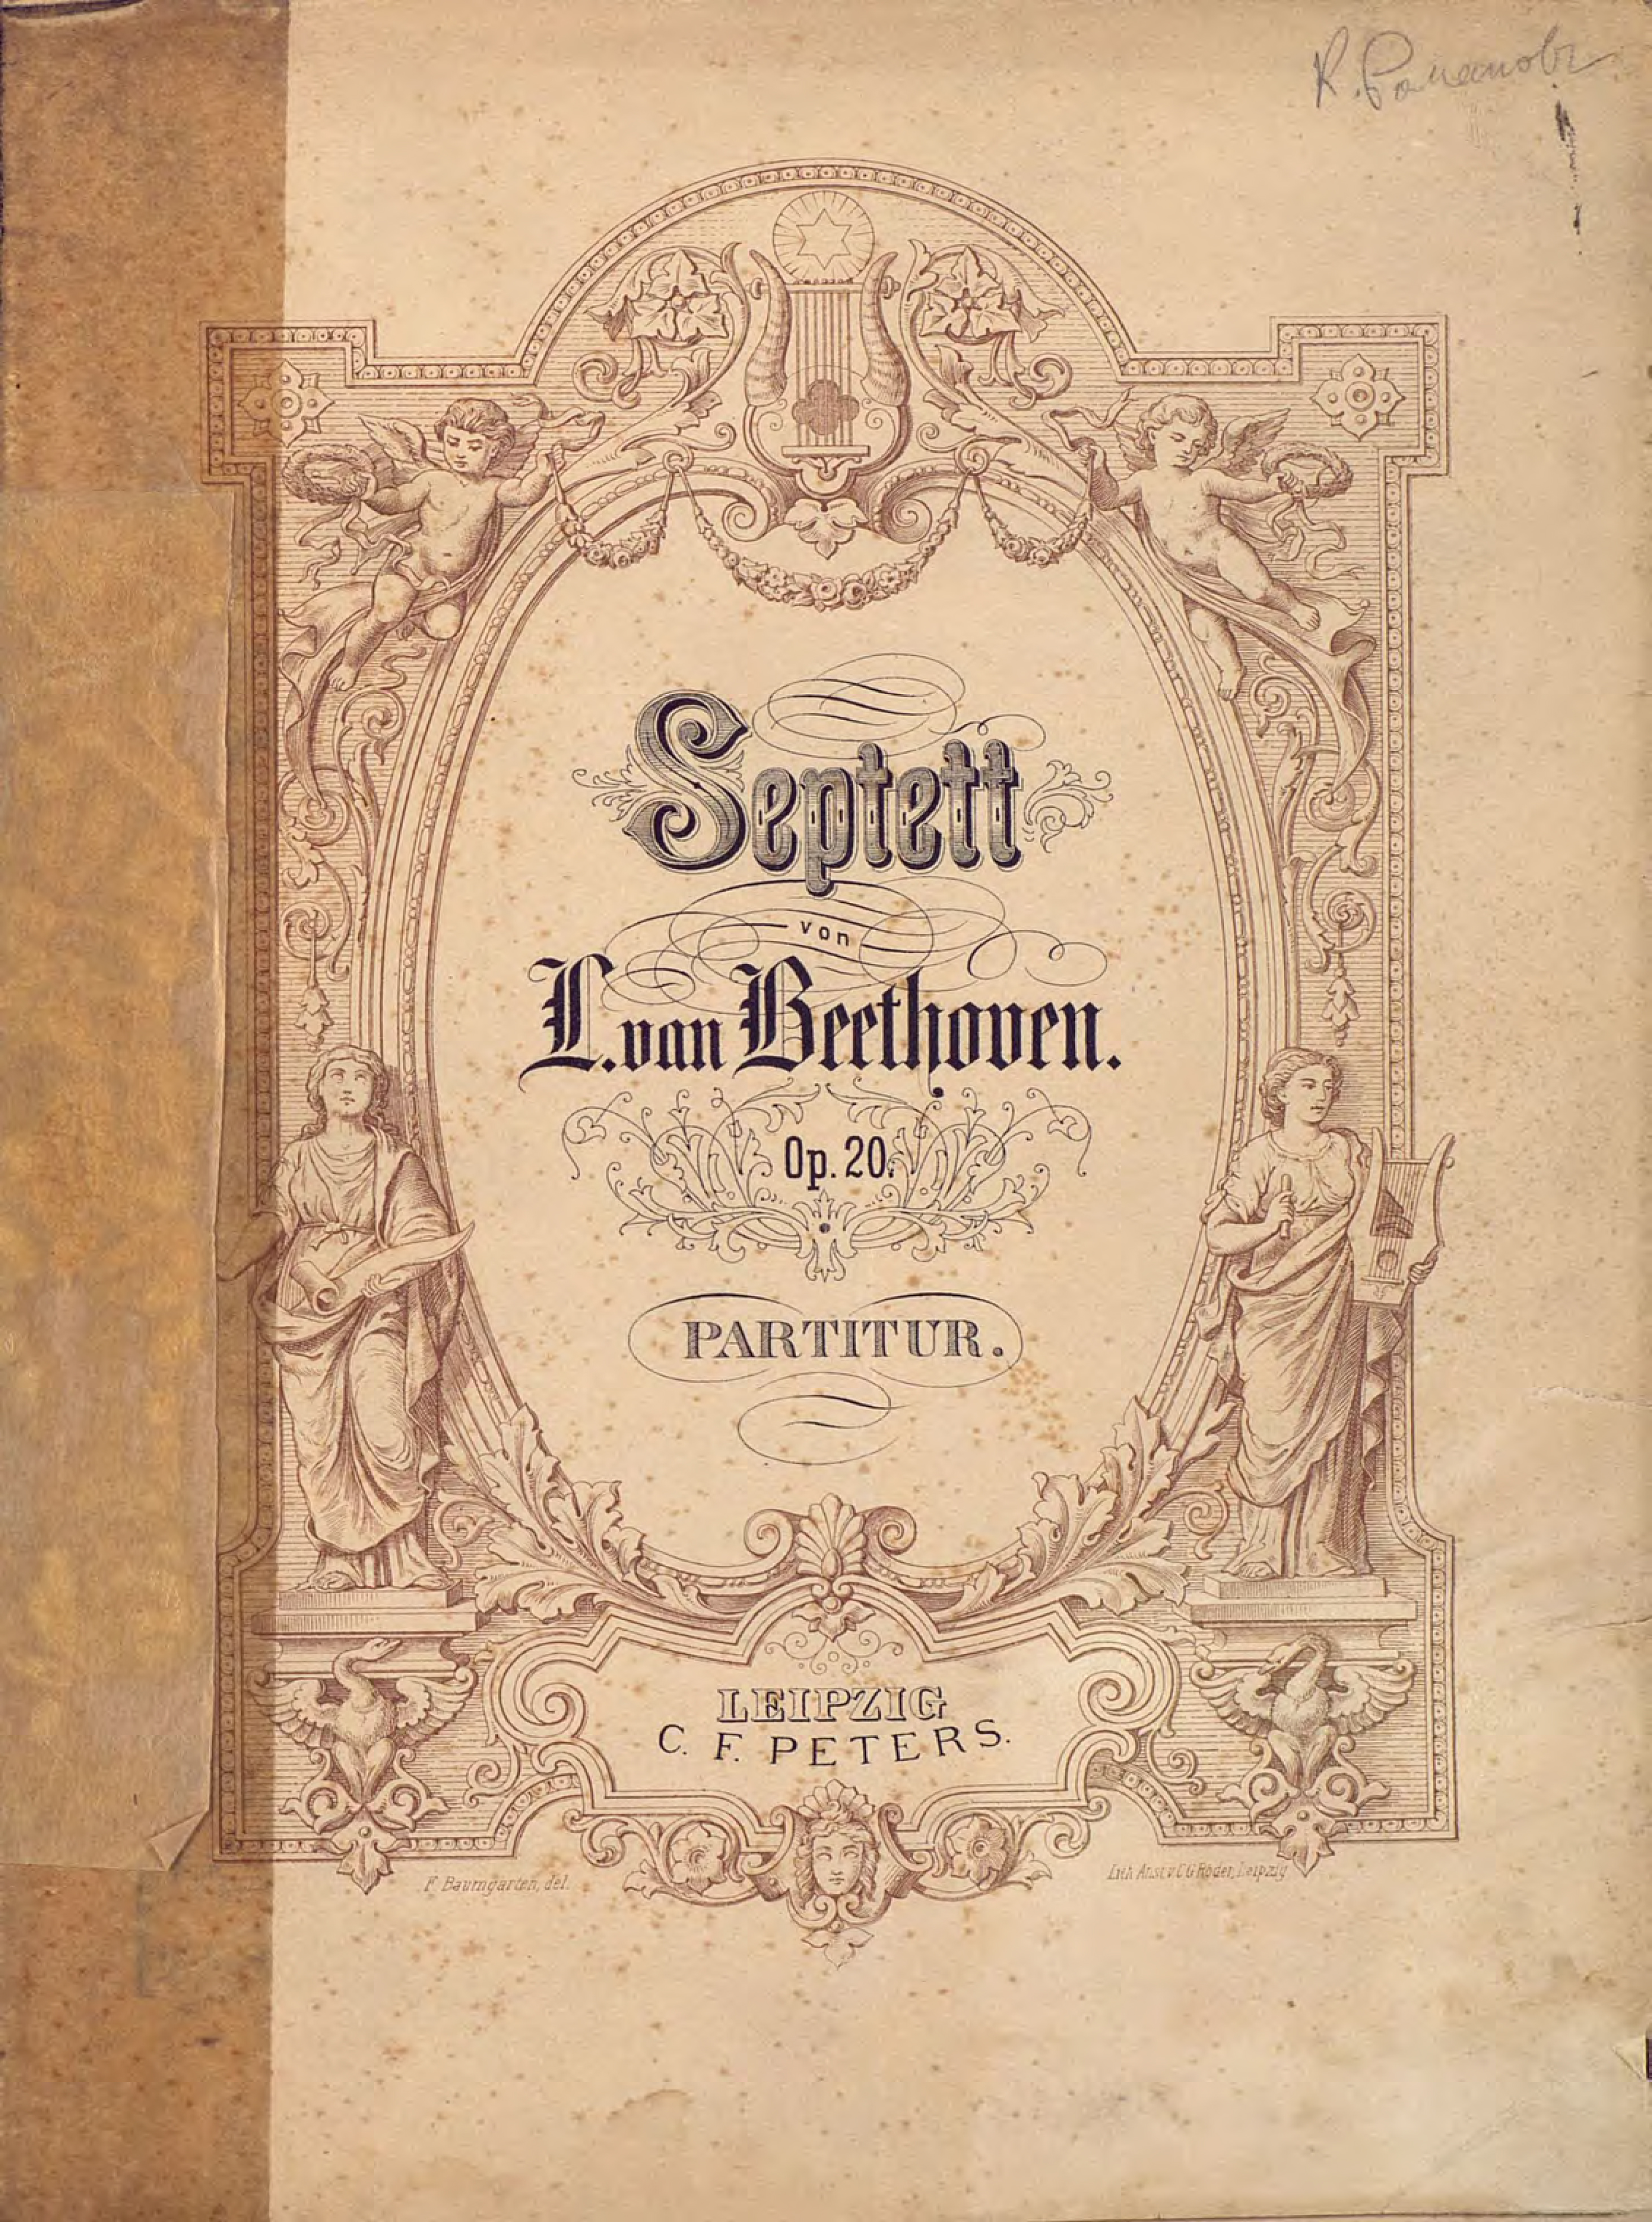 Людвиг ван Бетховен Septett v. L. van Beethoven